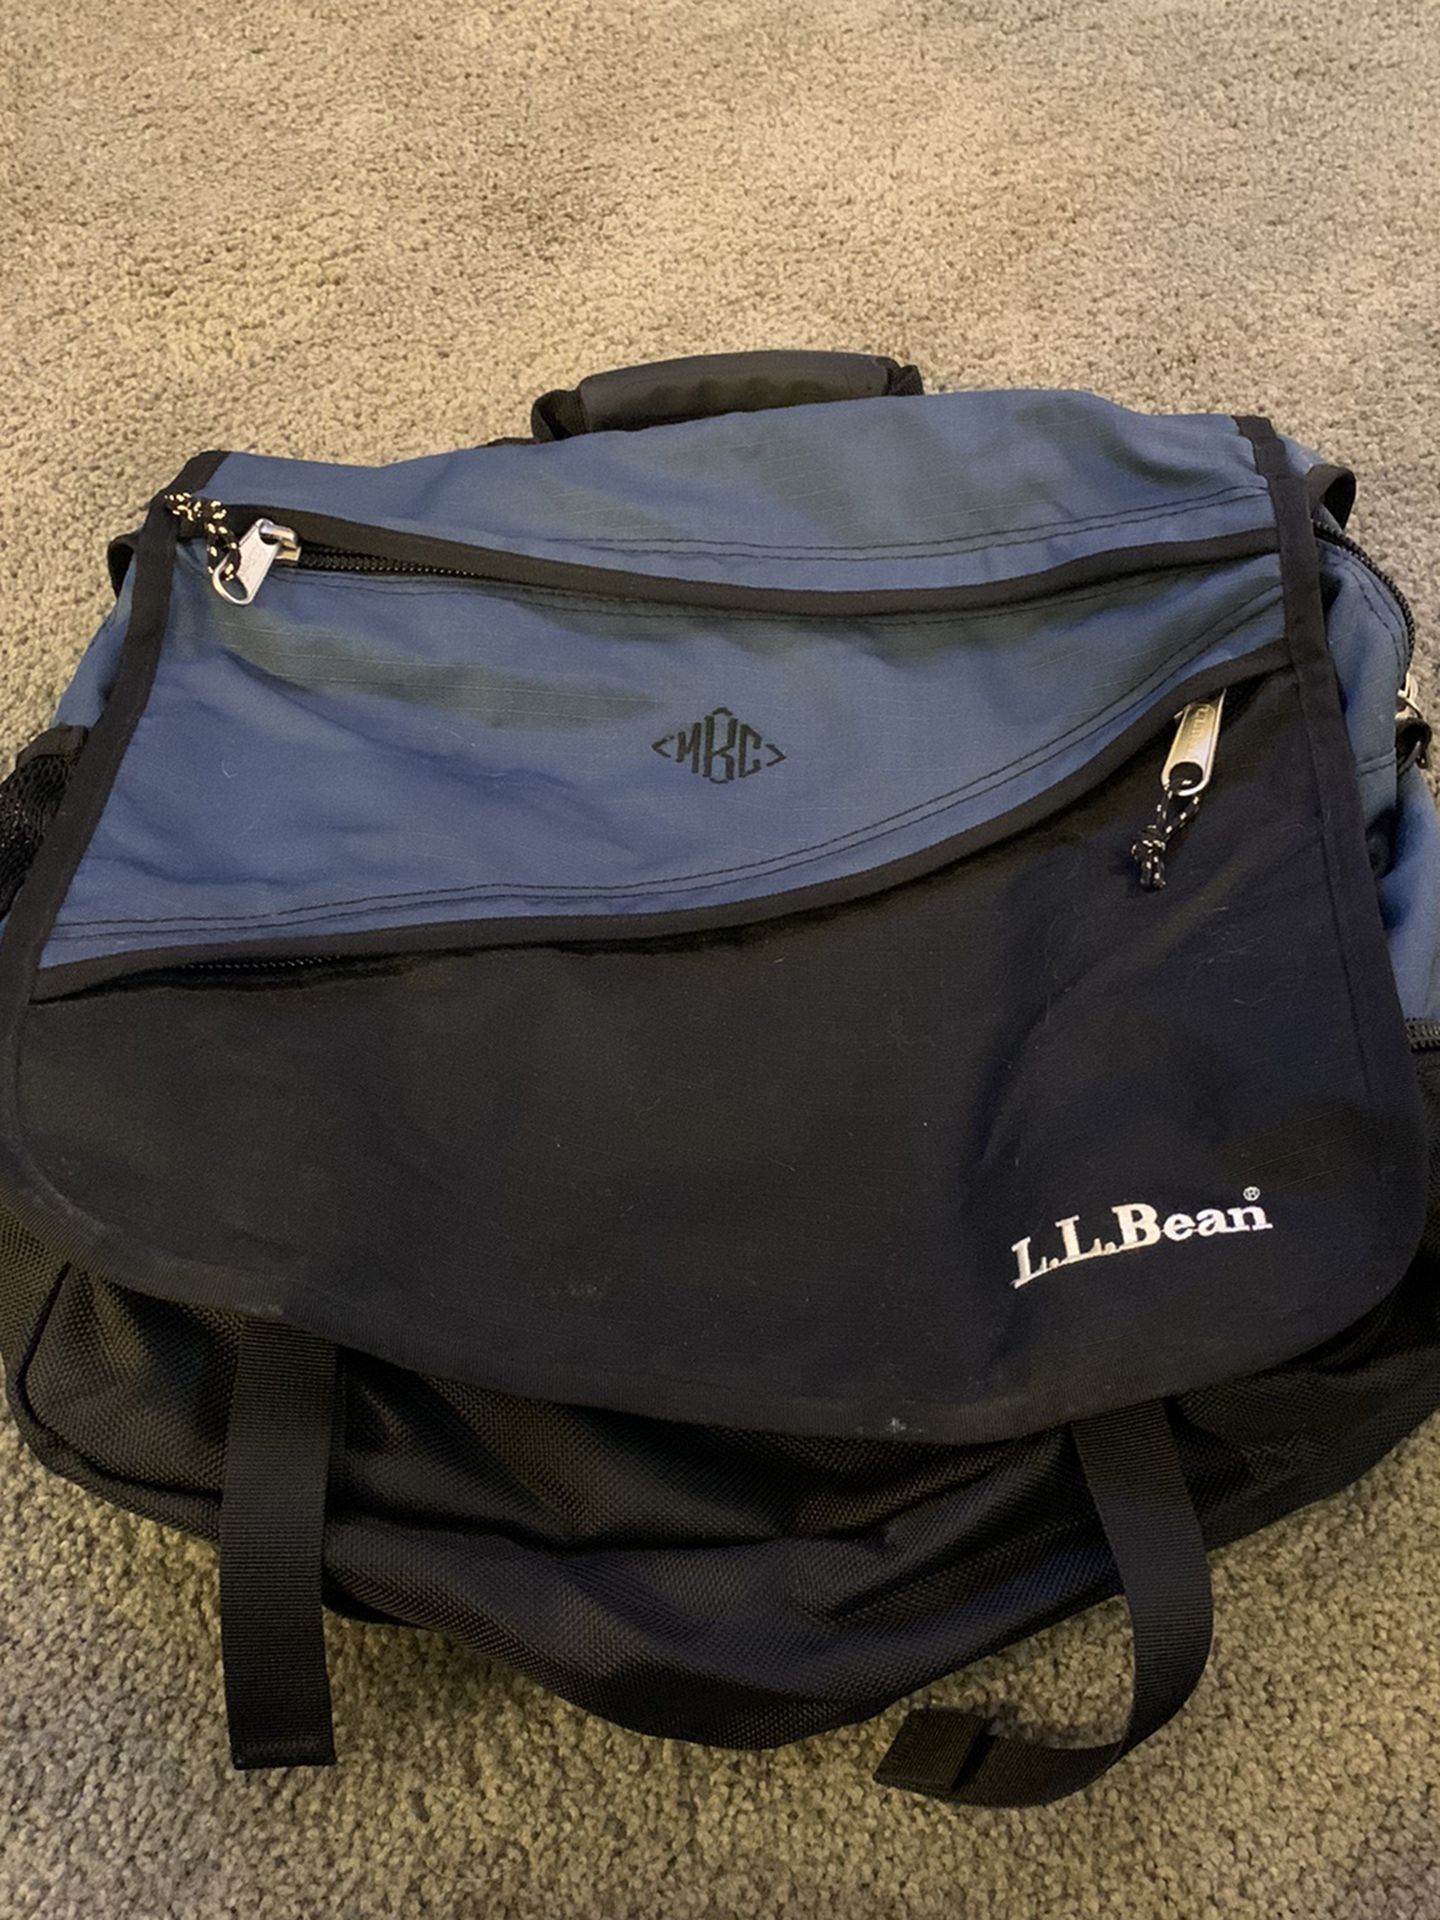 LL Bean Backpack And MessengerBag